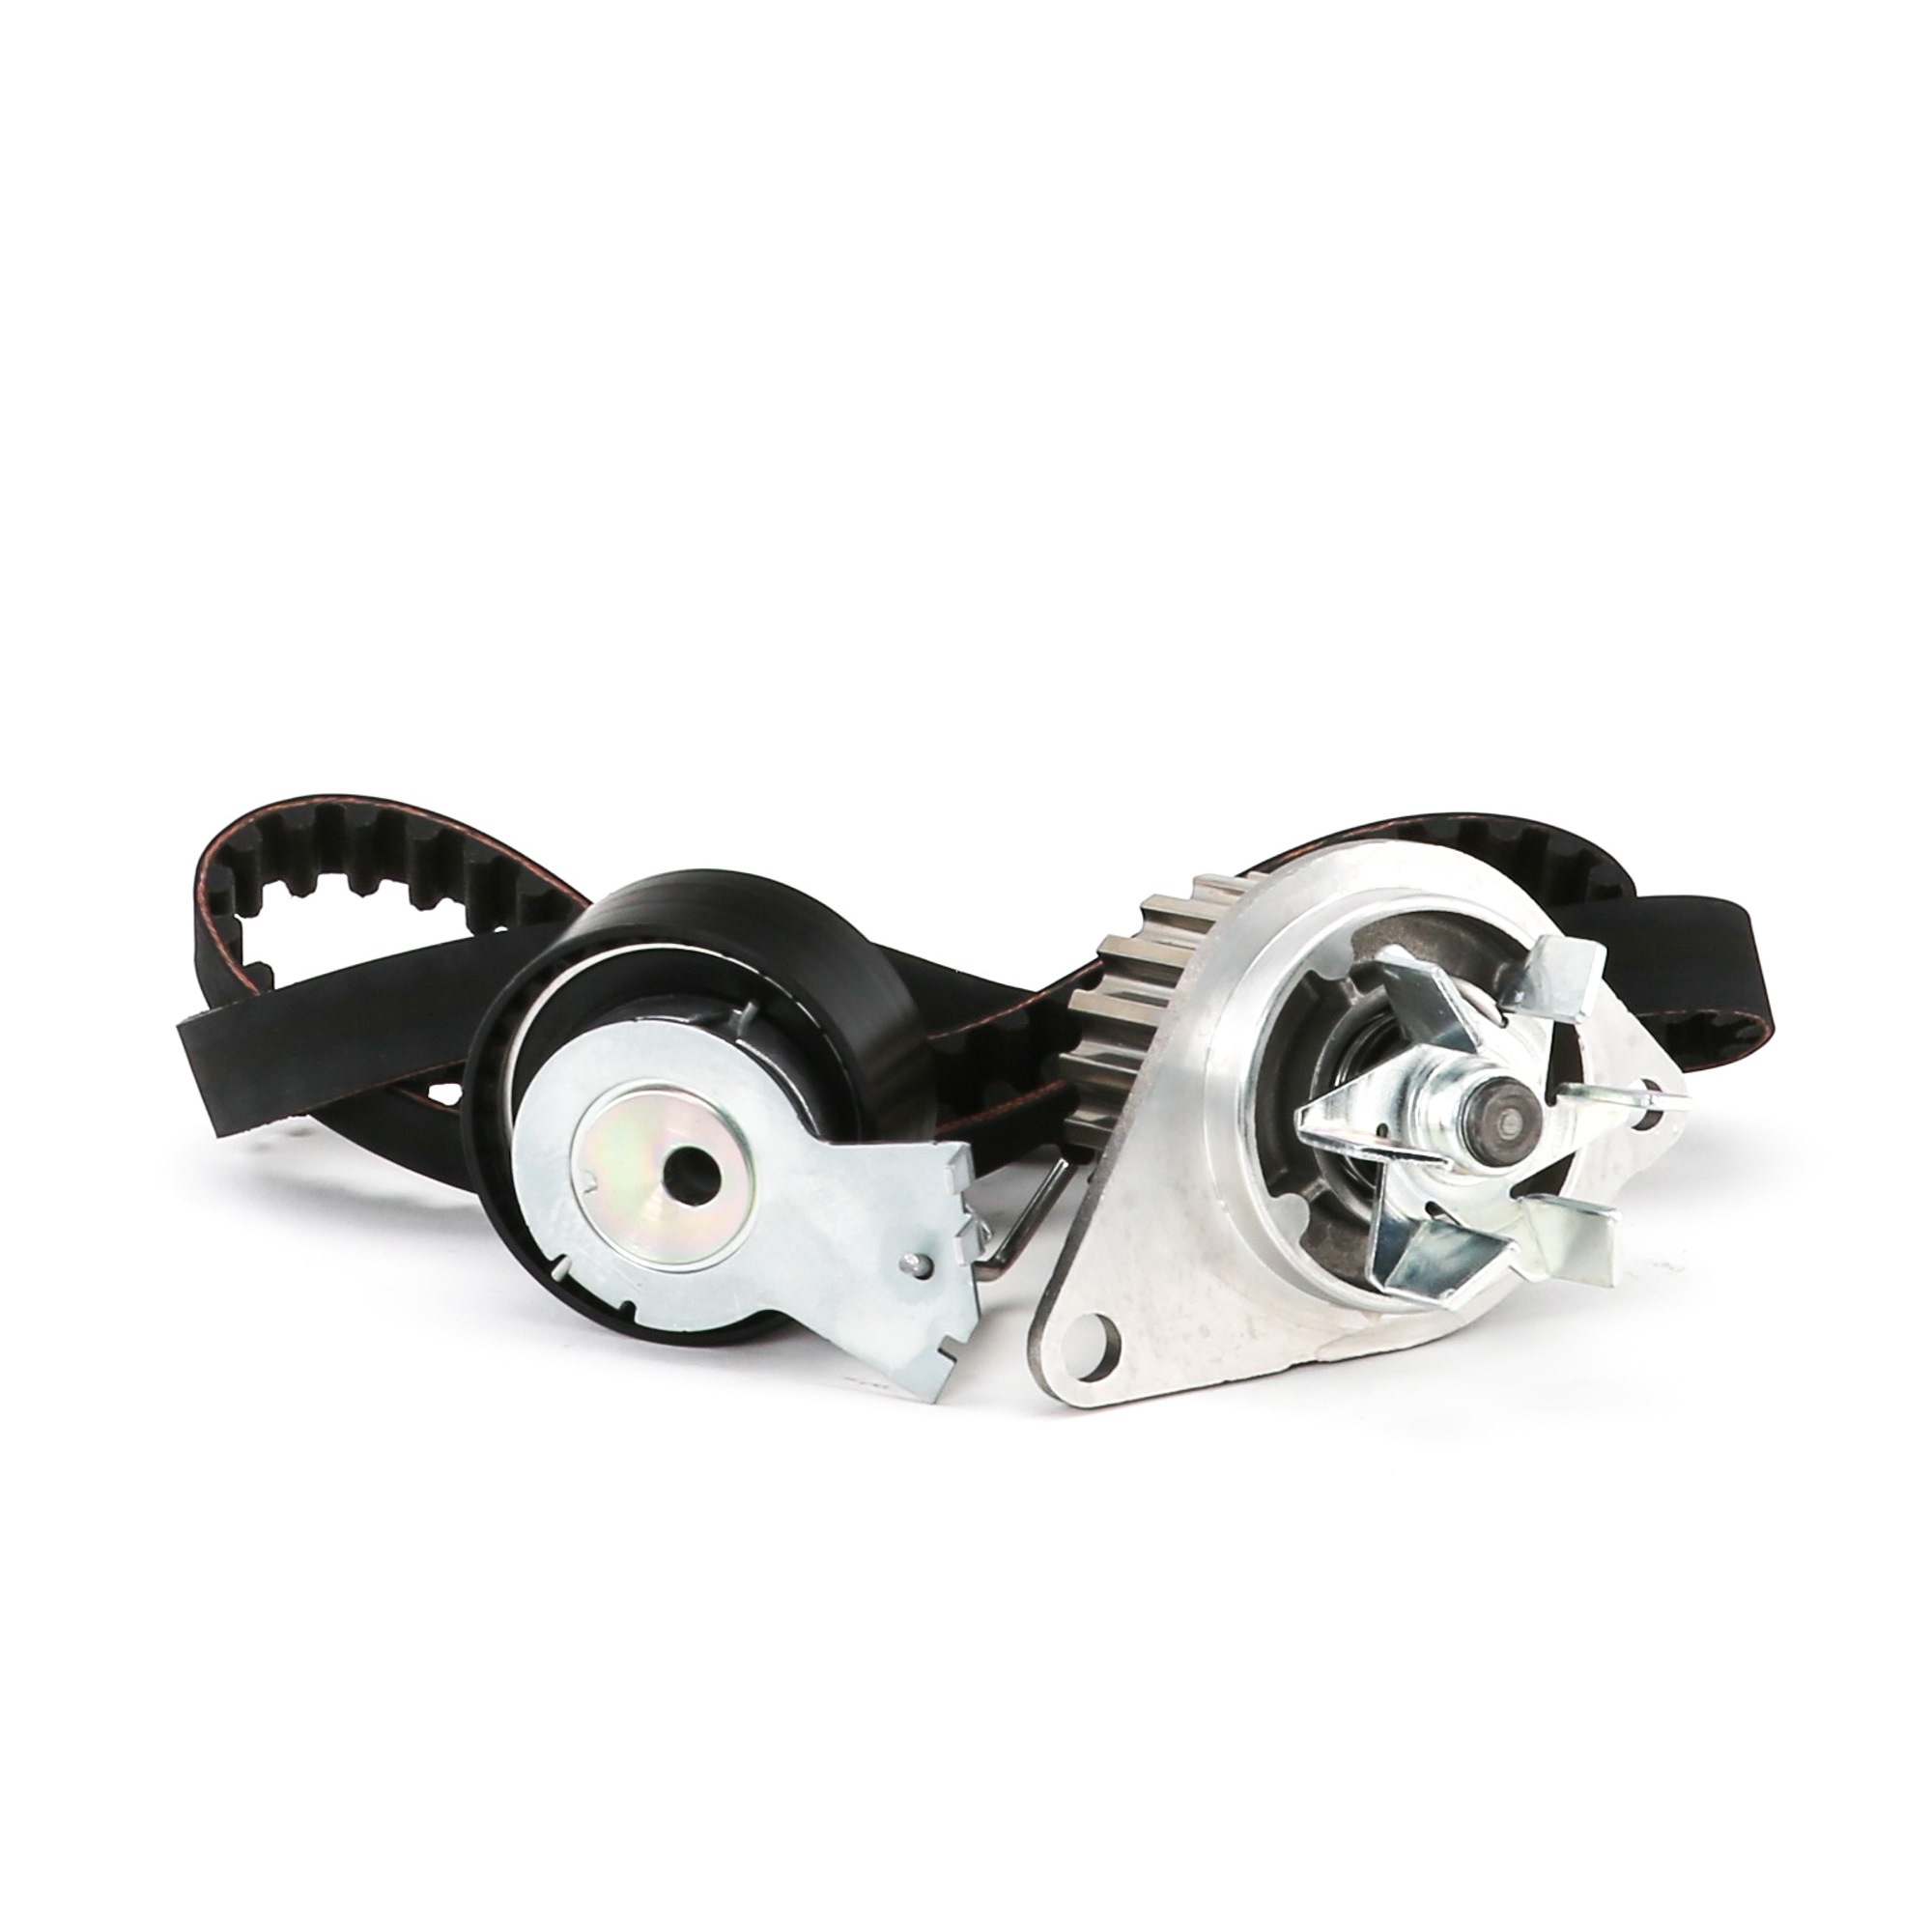 METELLI 30-0837-1 Water pump and timing belt kit Number of Teeth: 104, Width 1: 17 mm, for timing belt drive